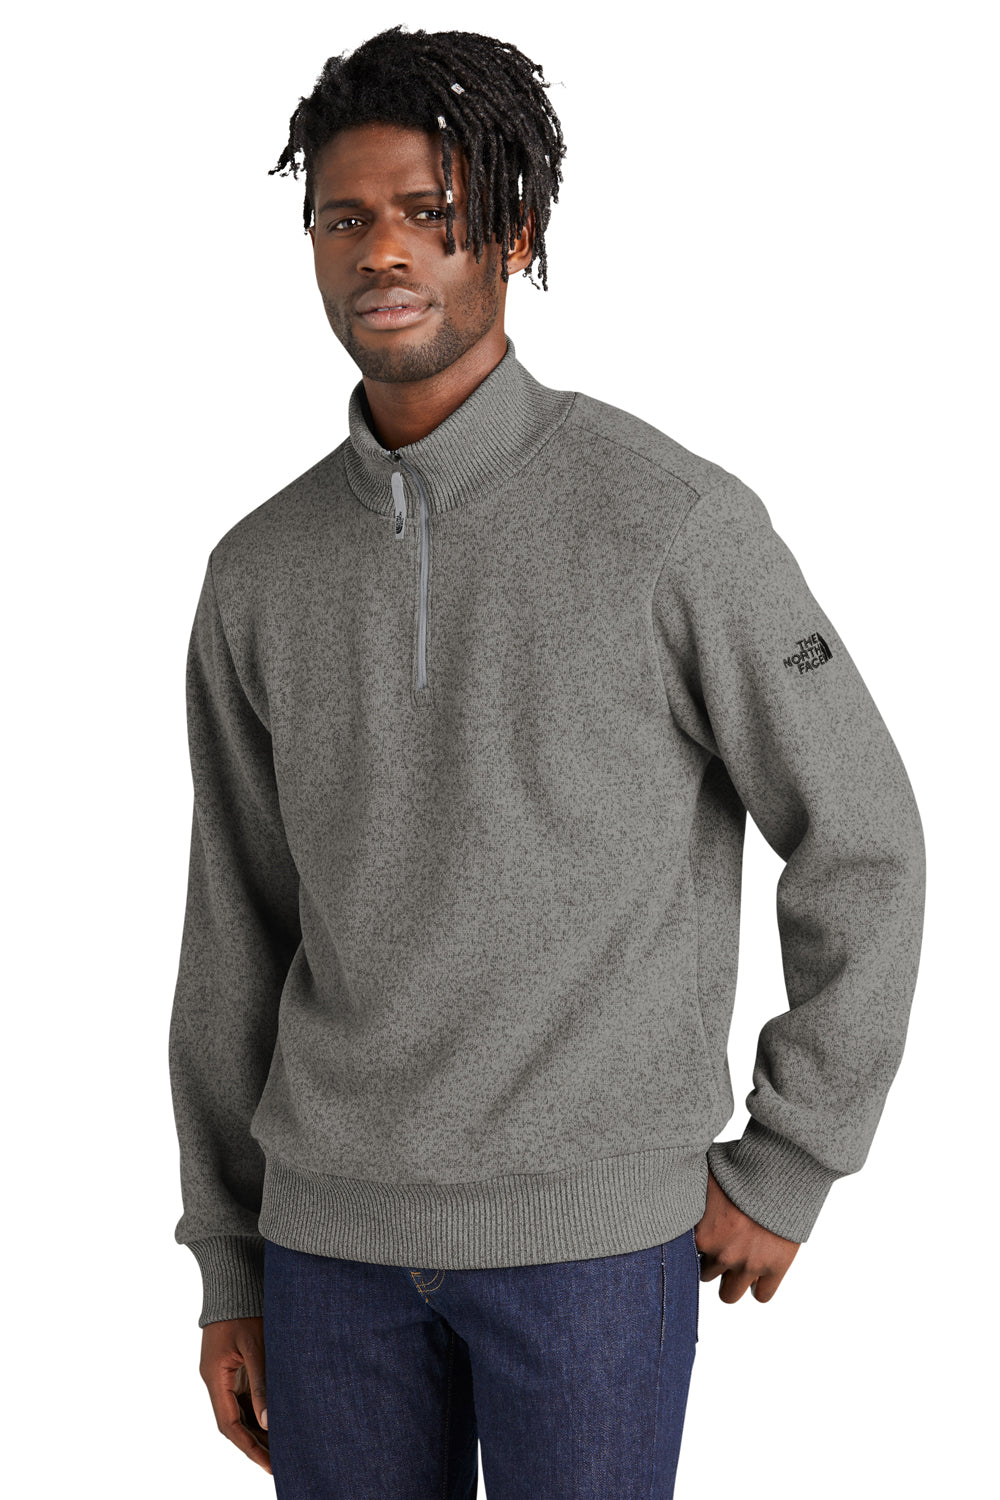 The North Face NF0A5ISE 1/4 Zip Sweater Fleece Sweatshirt Heather Medium Grey 3Q